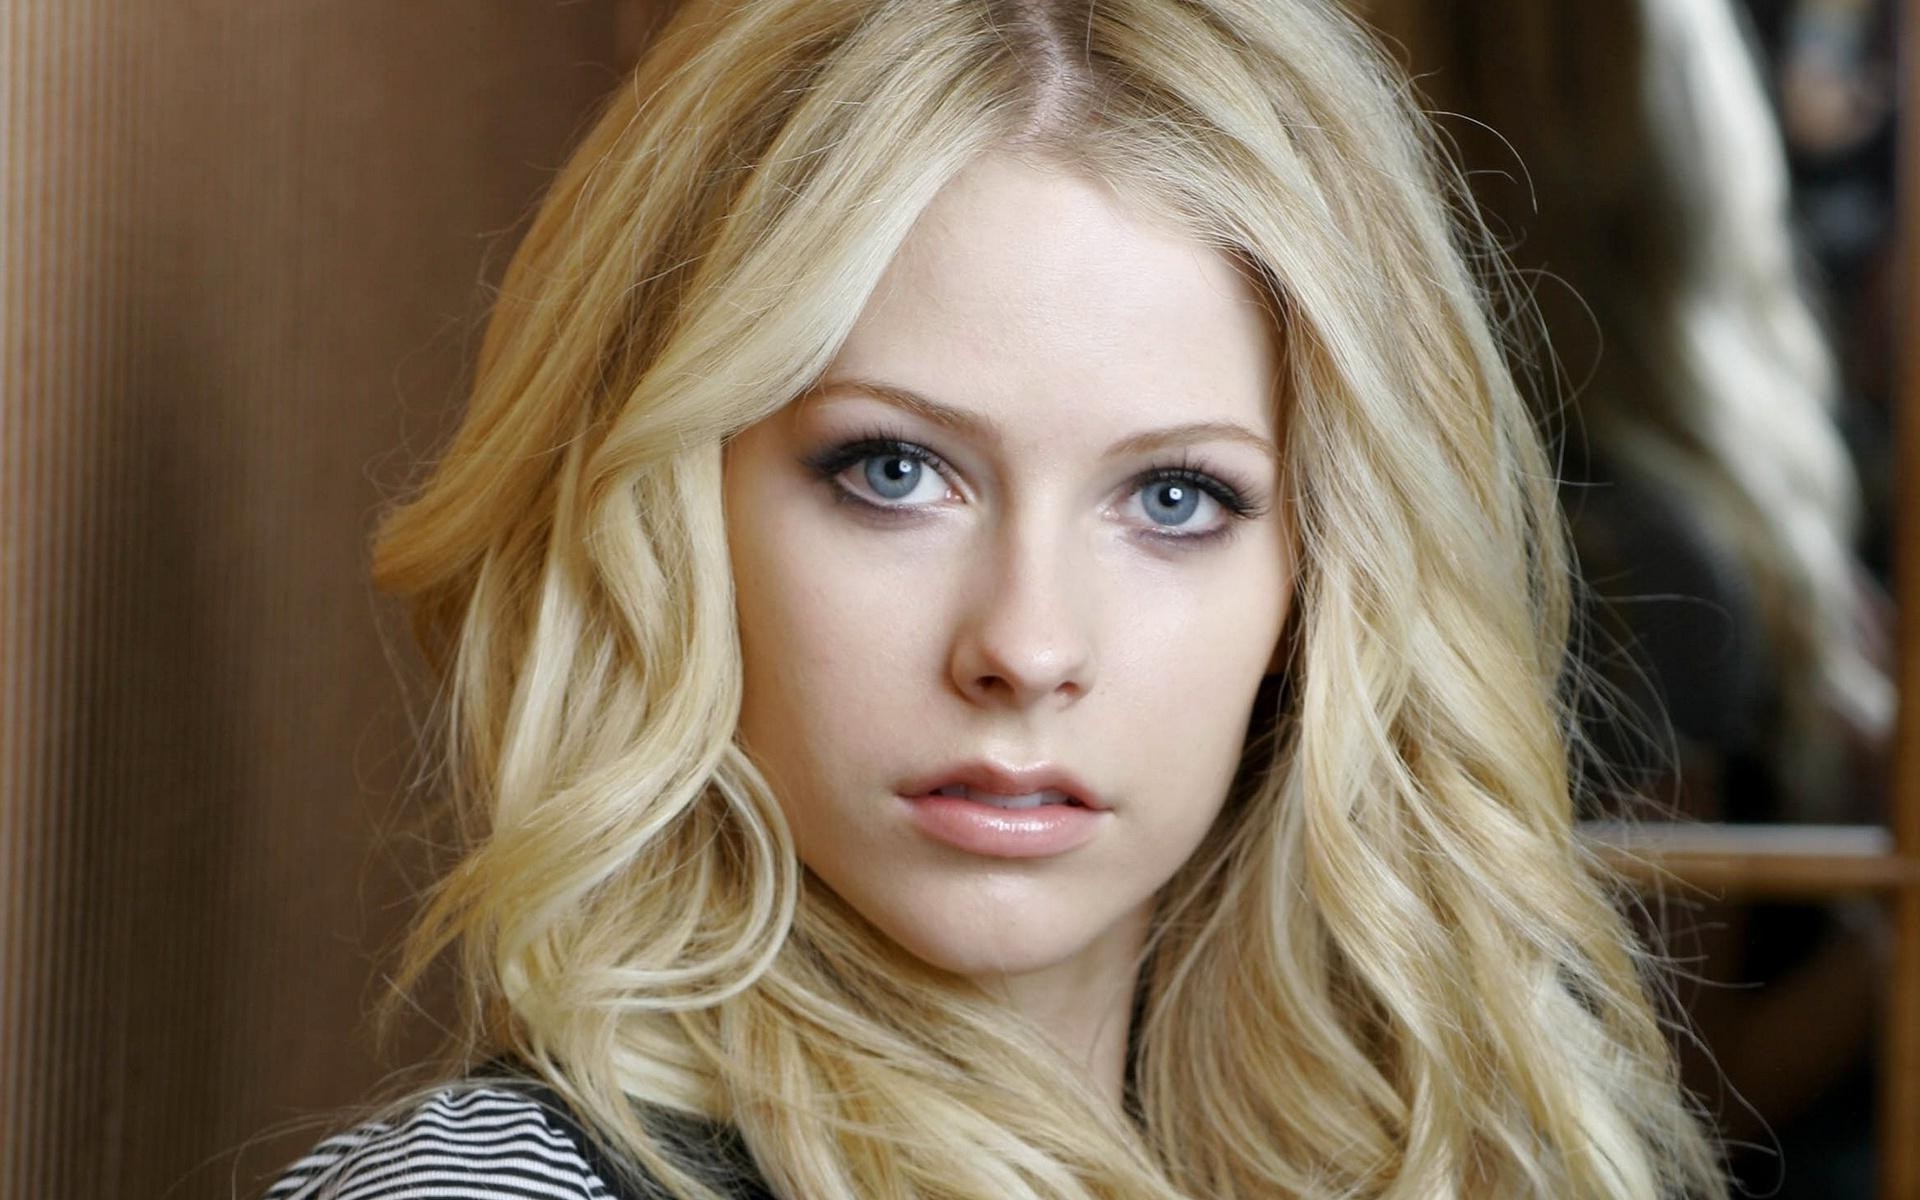 Singer Avril Lavigne Music Blonde Portrait Women Wallpapers Hd Desktop And Mobile Backgrounds 